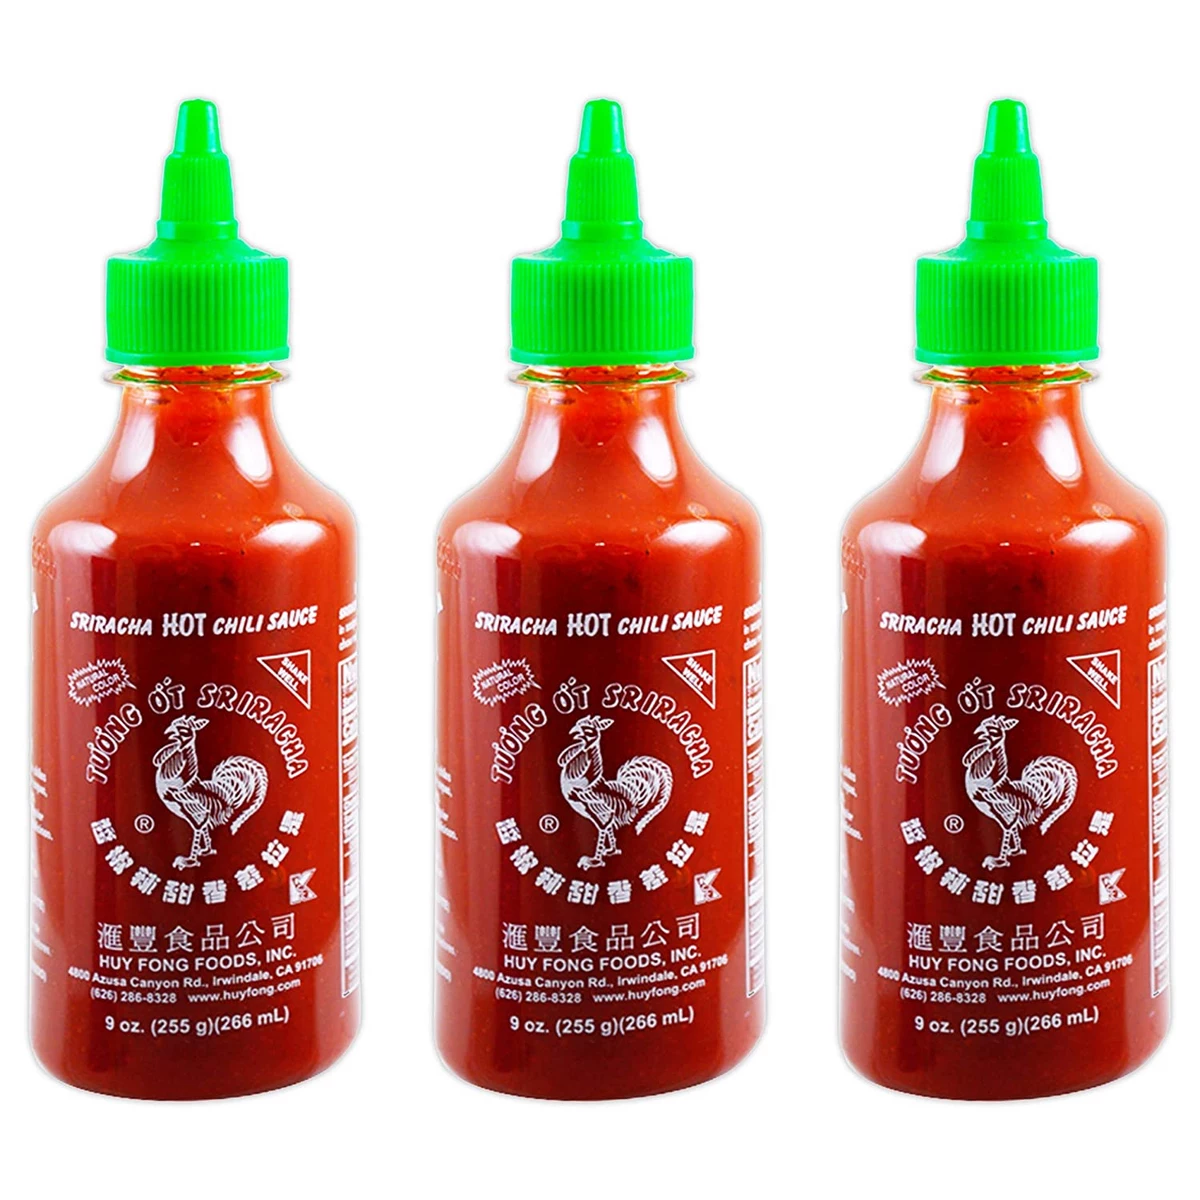 Sriracha Bottle Splatter Lounge Pants for Mens and Womens Sleepwear 